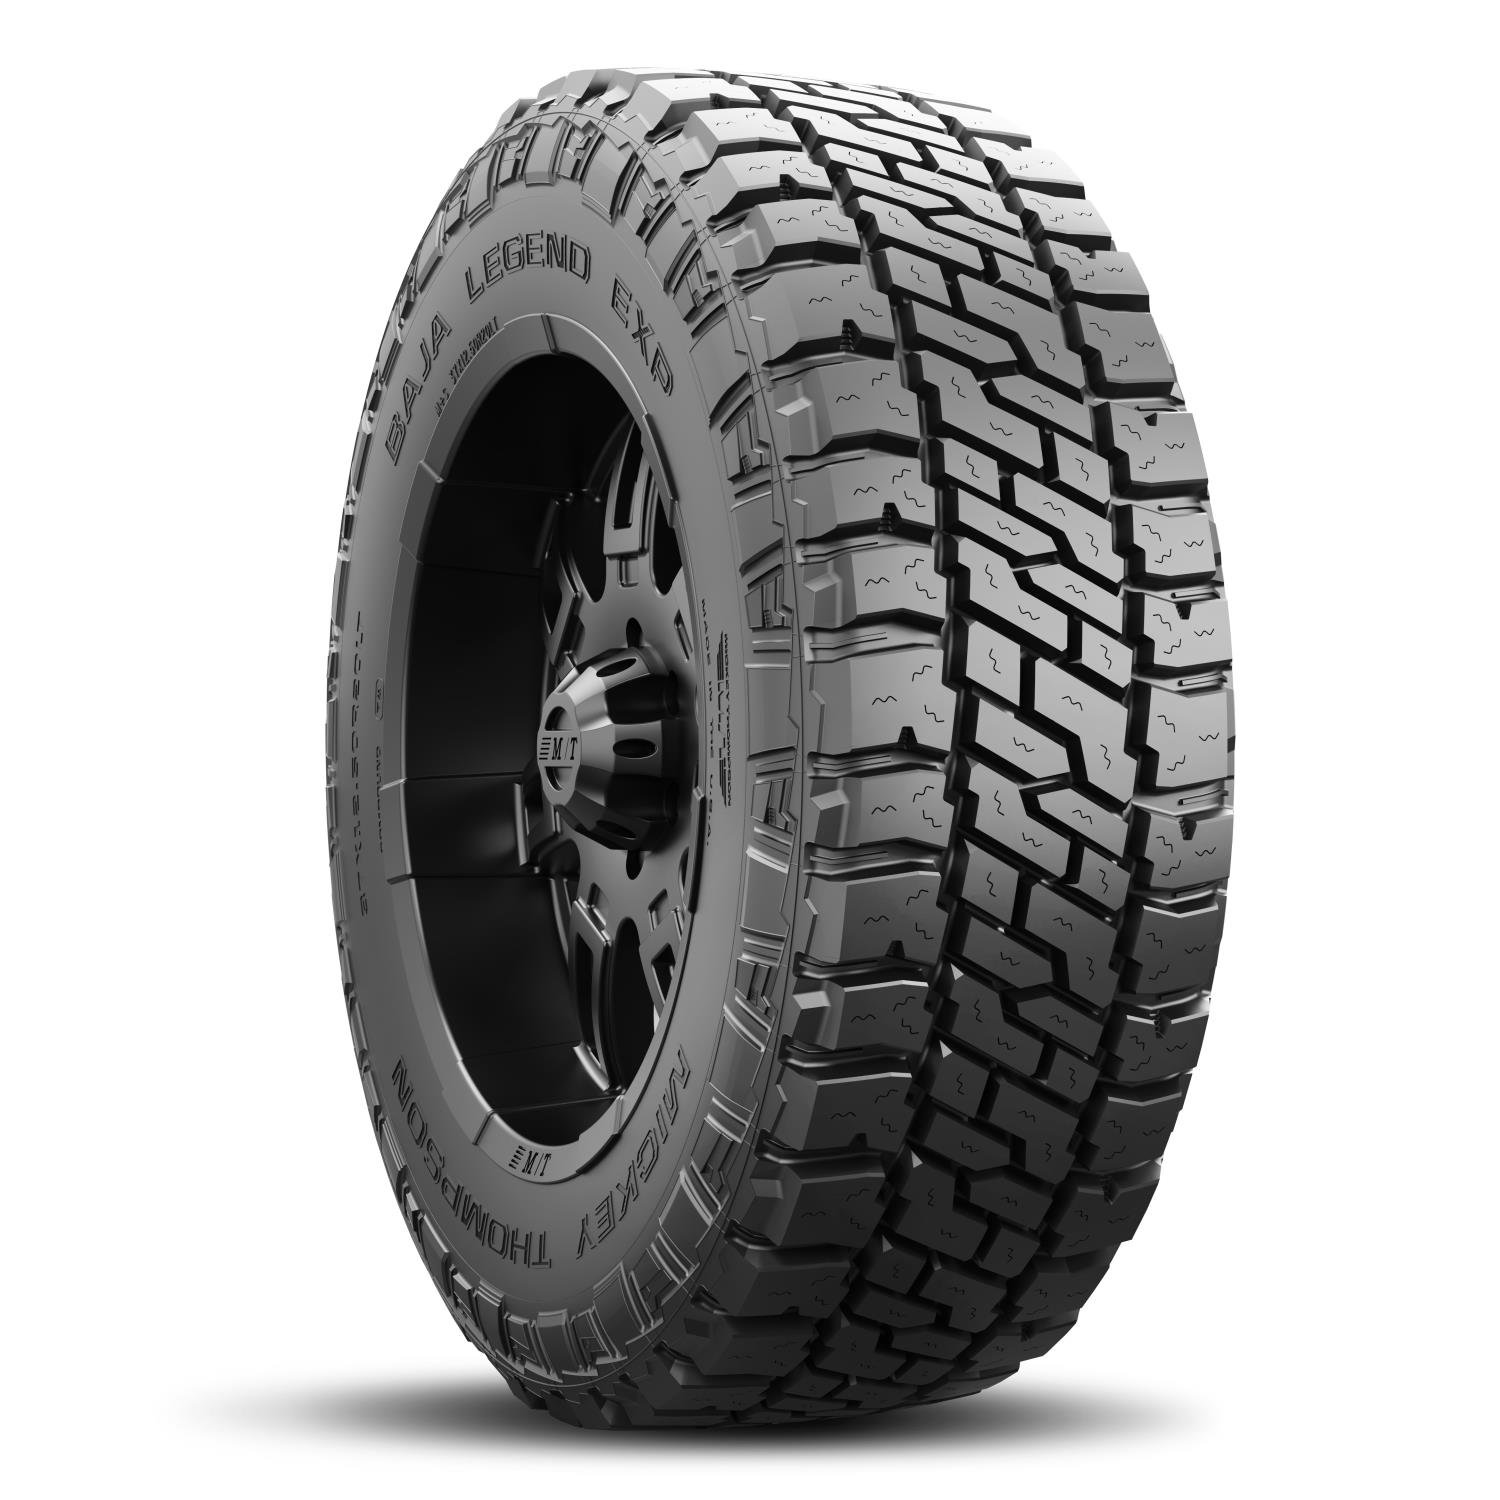 Baja Legend EXP Tire LT265/60R20